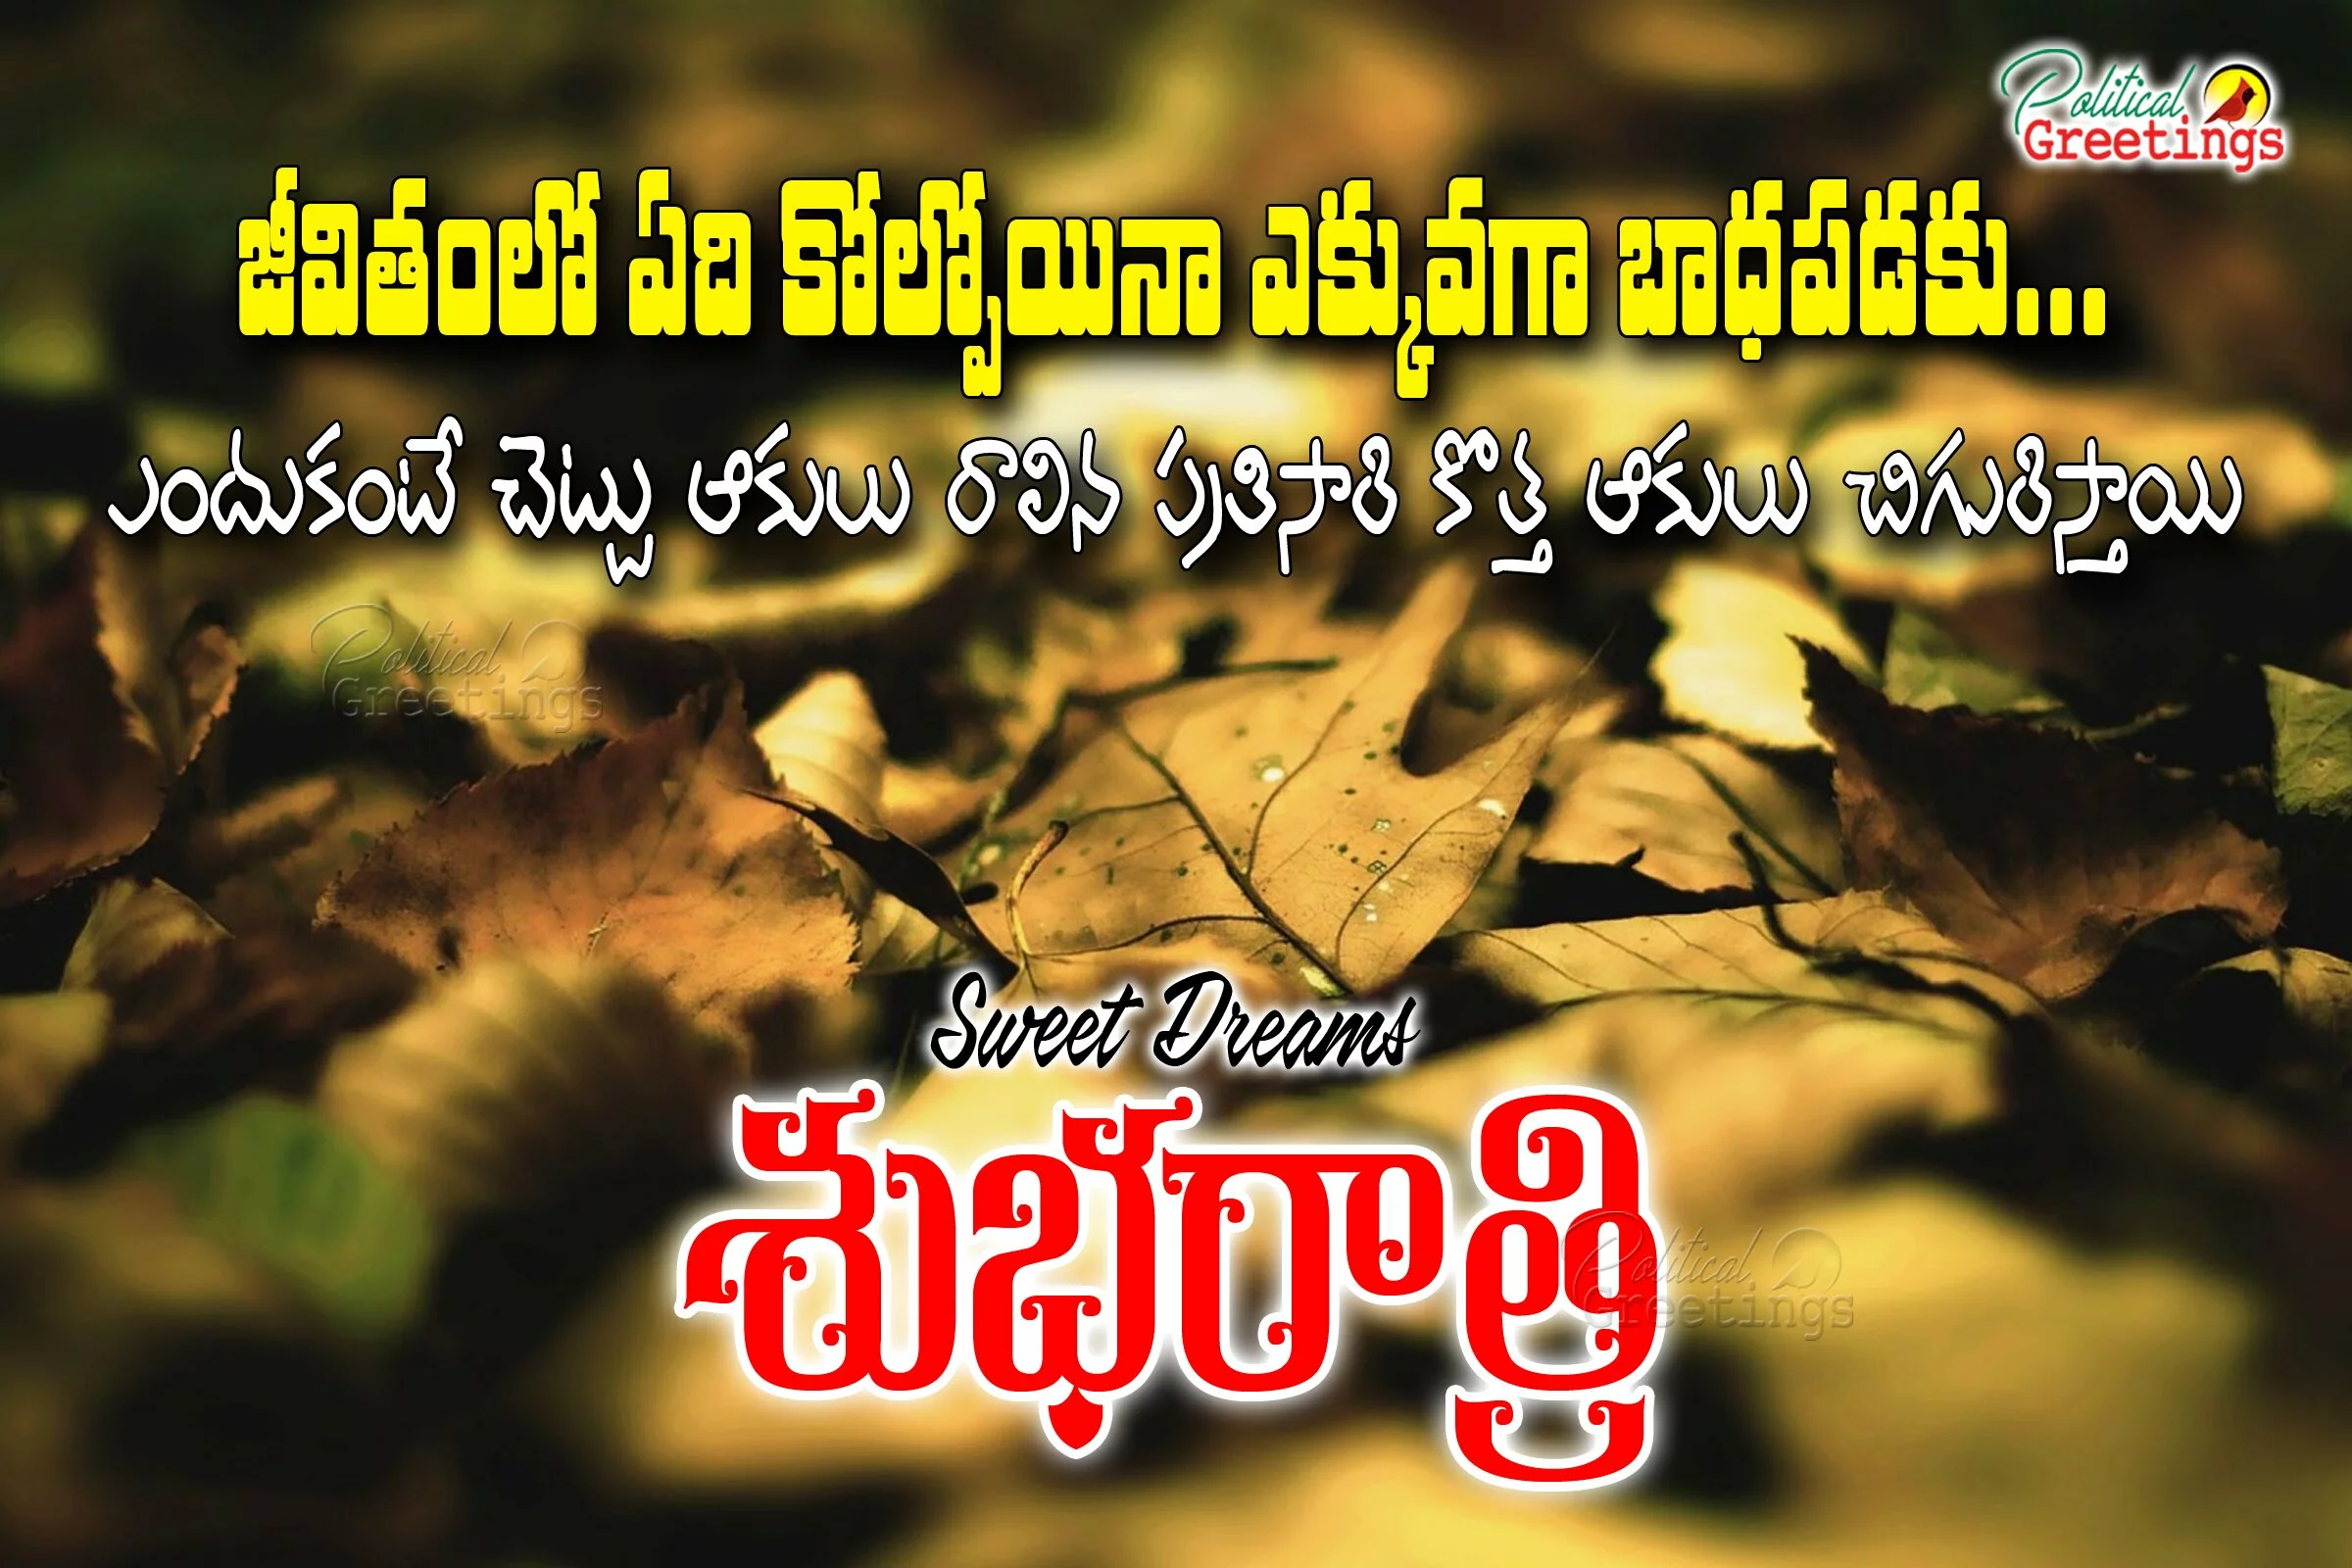 Subharaatri Inspirational Sayings messages in Telugu-Good night telugu quotes